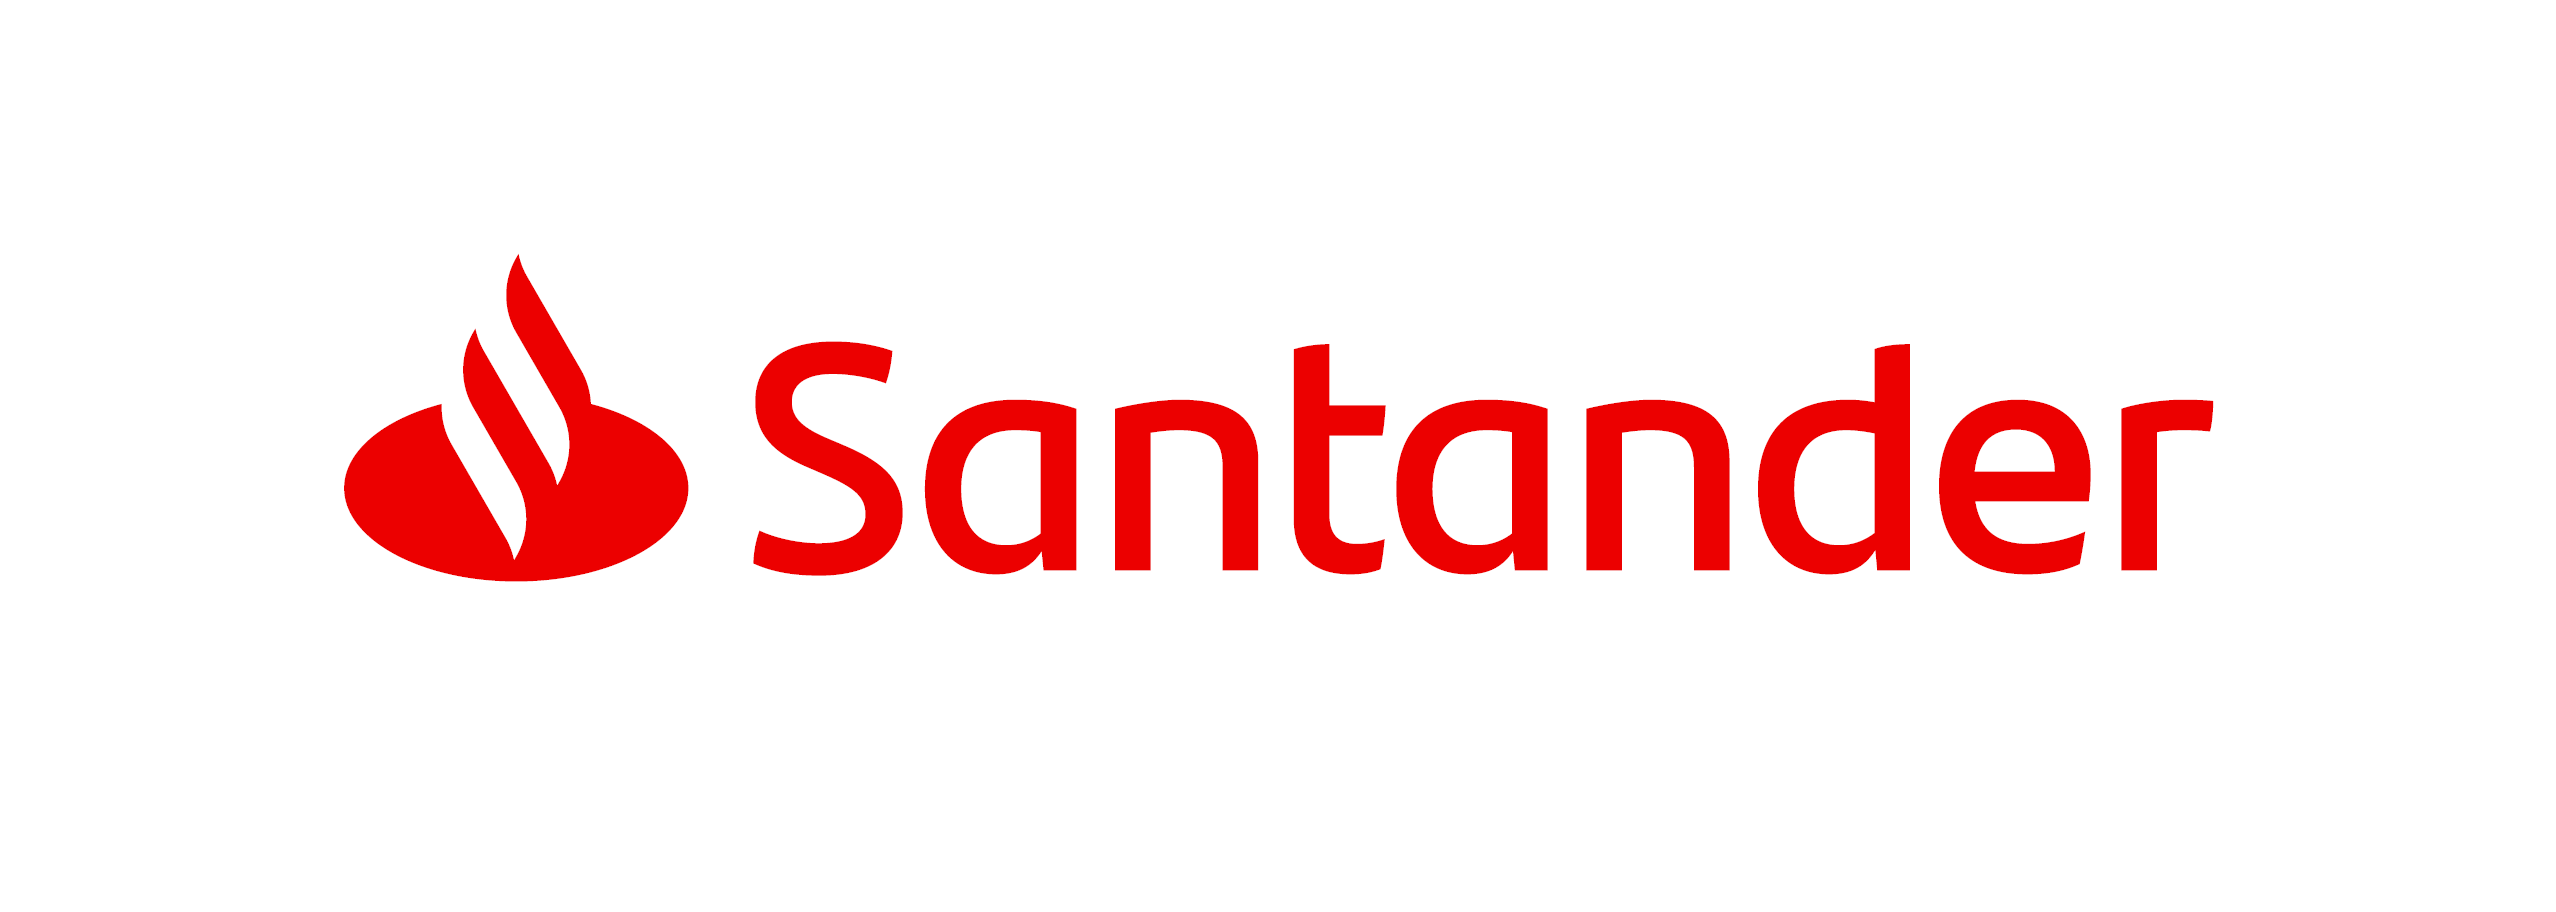 San logo